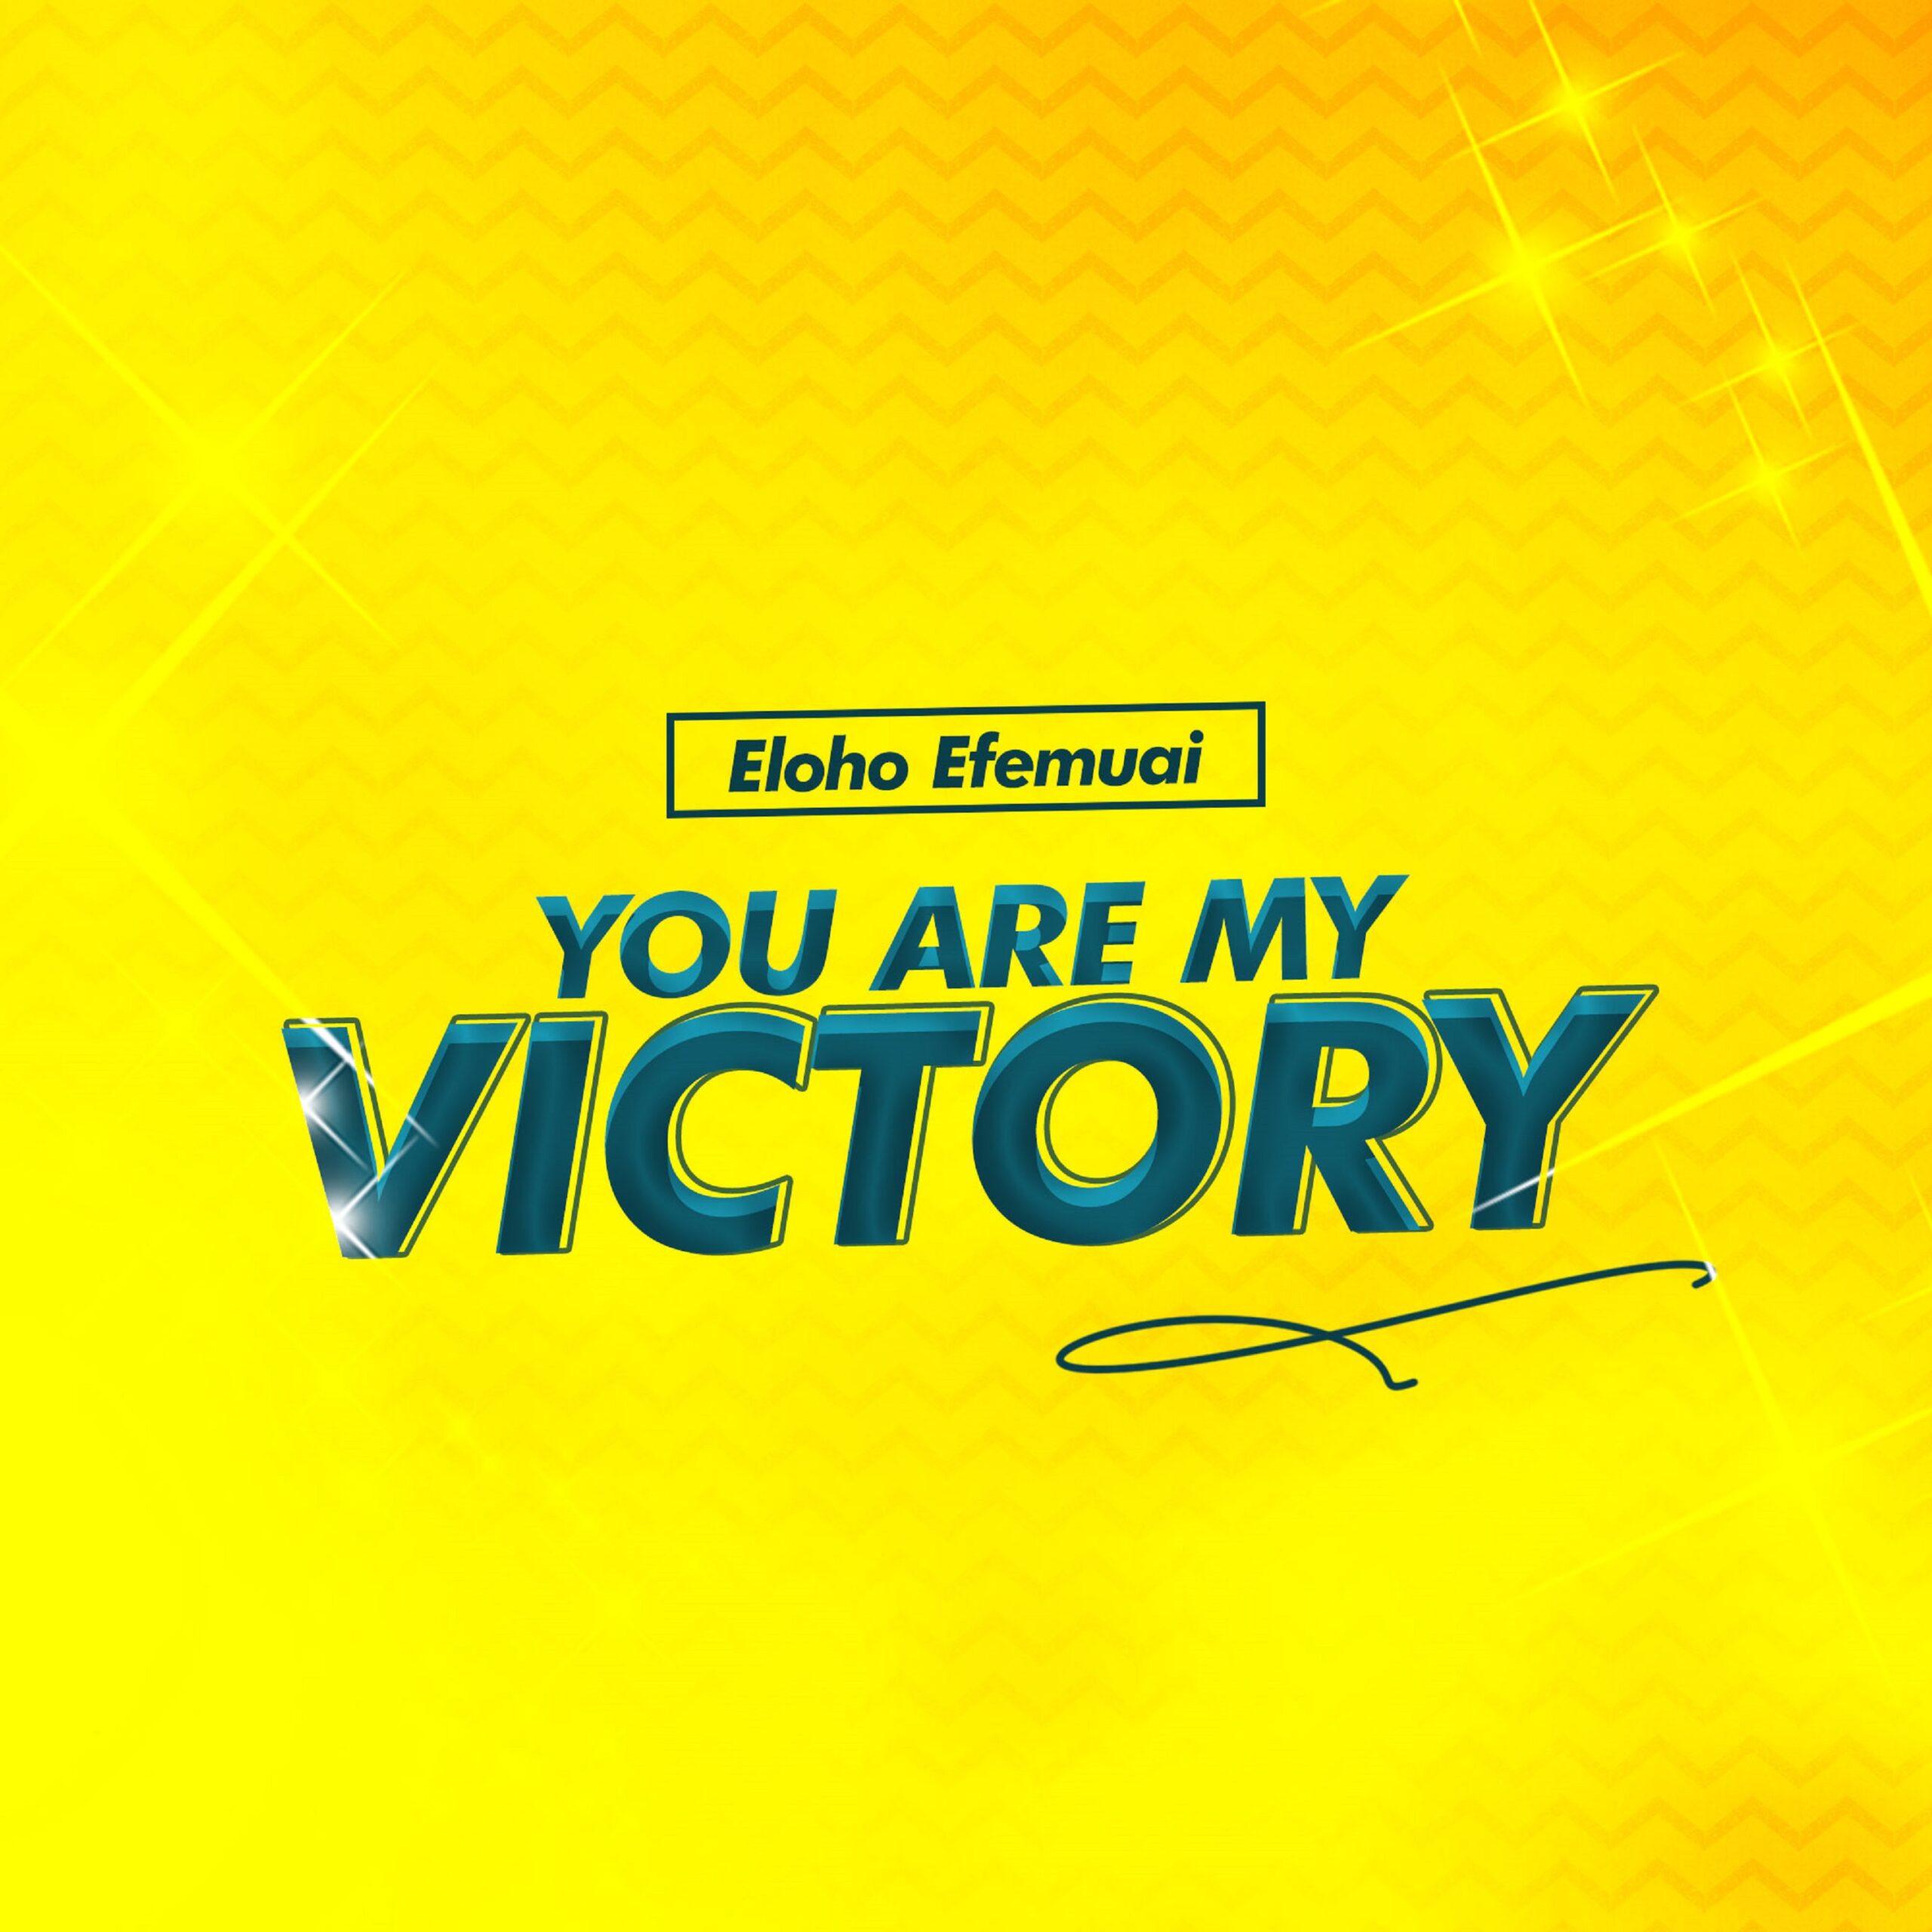 You are my Victory - Eloho Efemuaishares